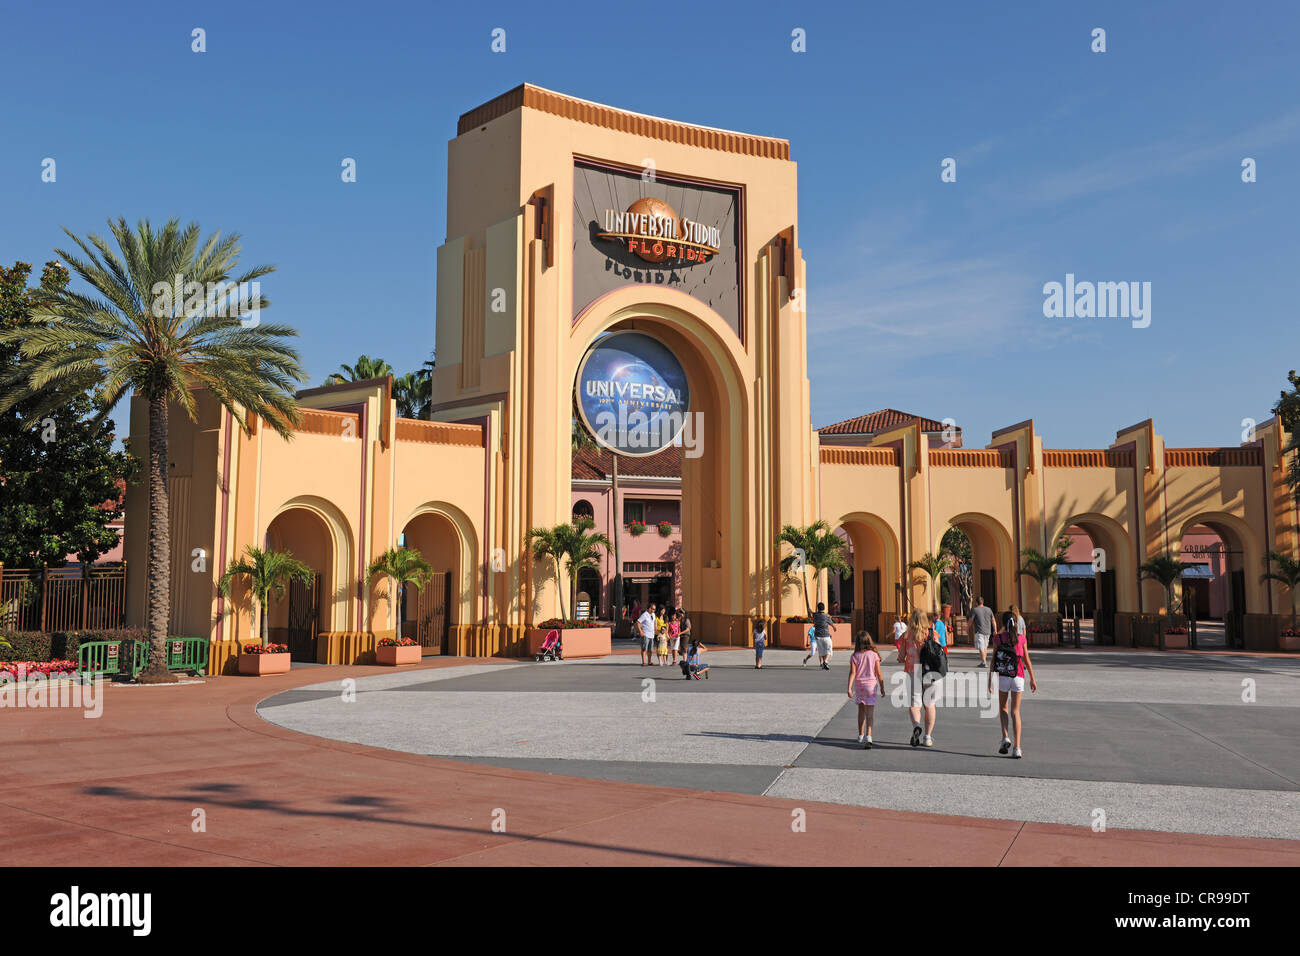 ORLANDO, FLORIDA - 4. Juni 2012: Universal Studios Theme Park Eingang Logo am Gebäude Stockfoto